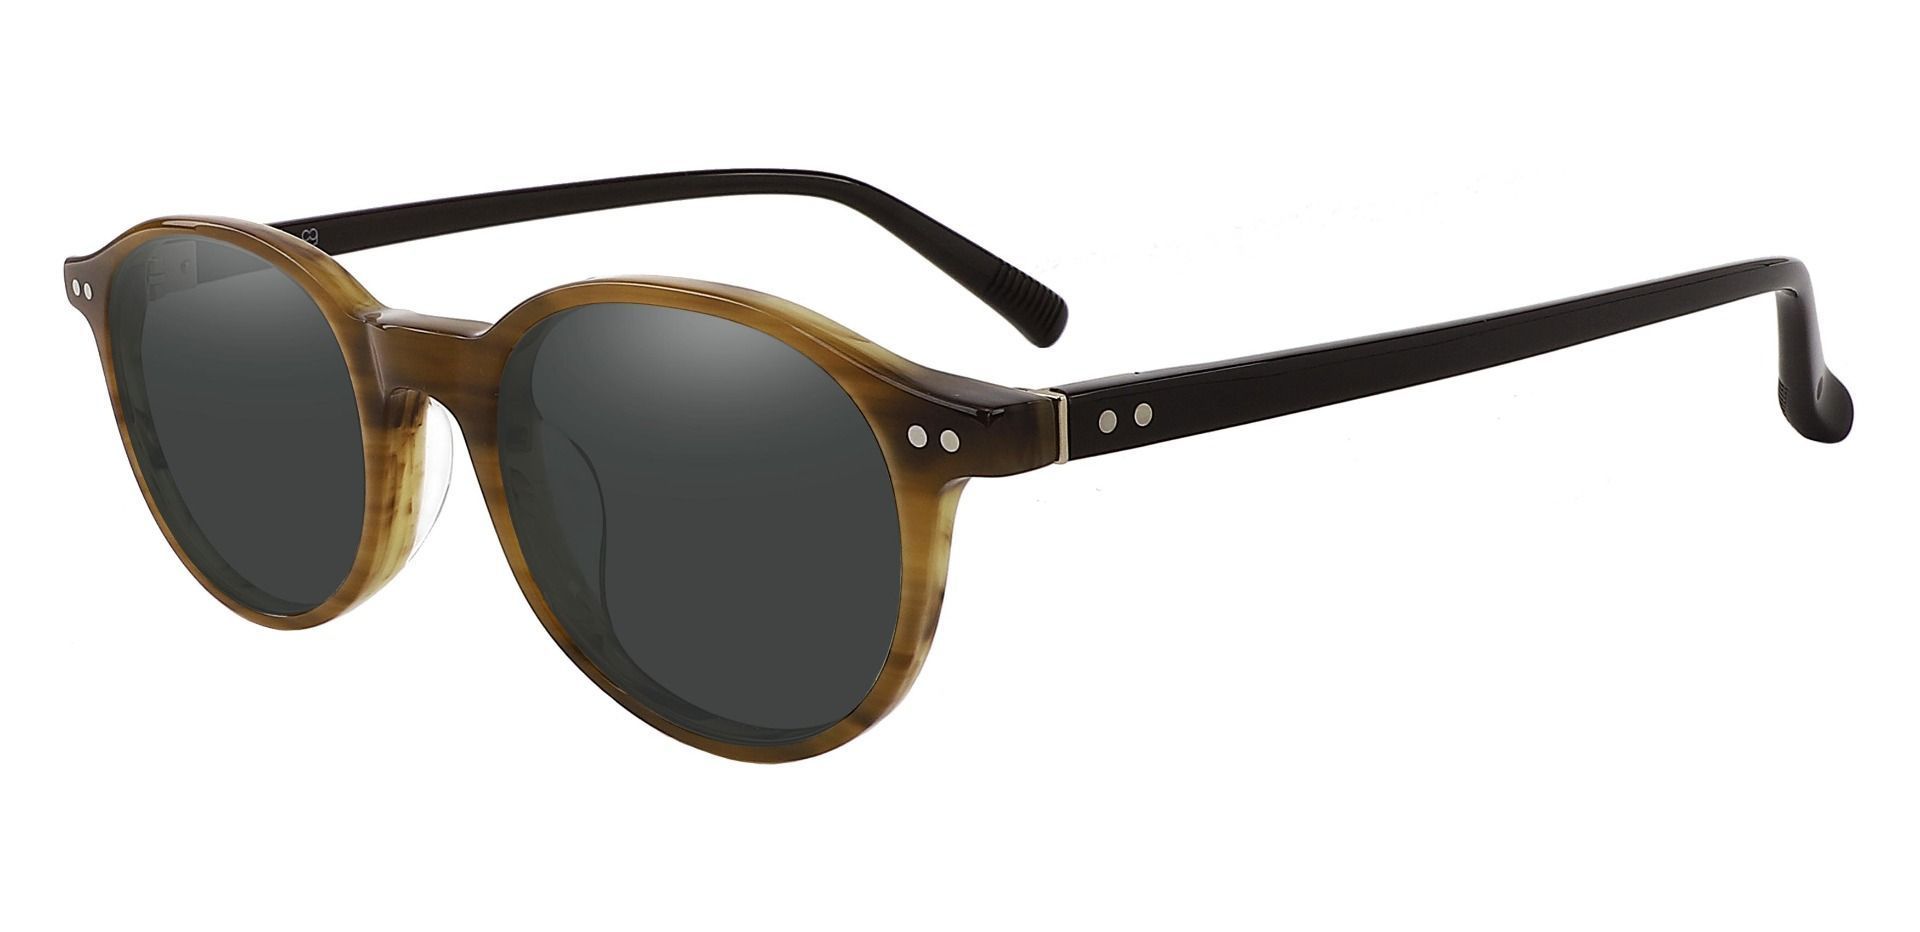 Avon Oval Prescription Sunglasses - Brown Frame With Gray Lenses